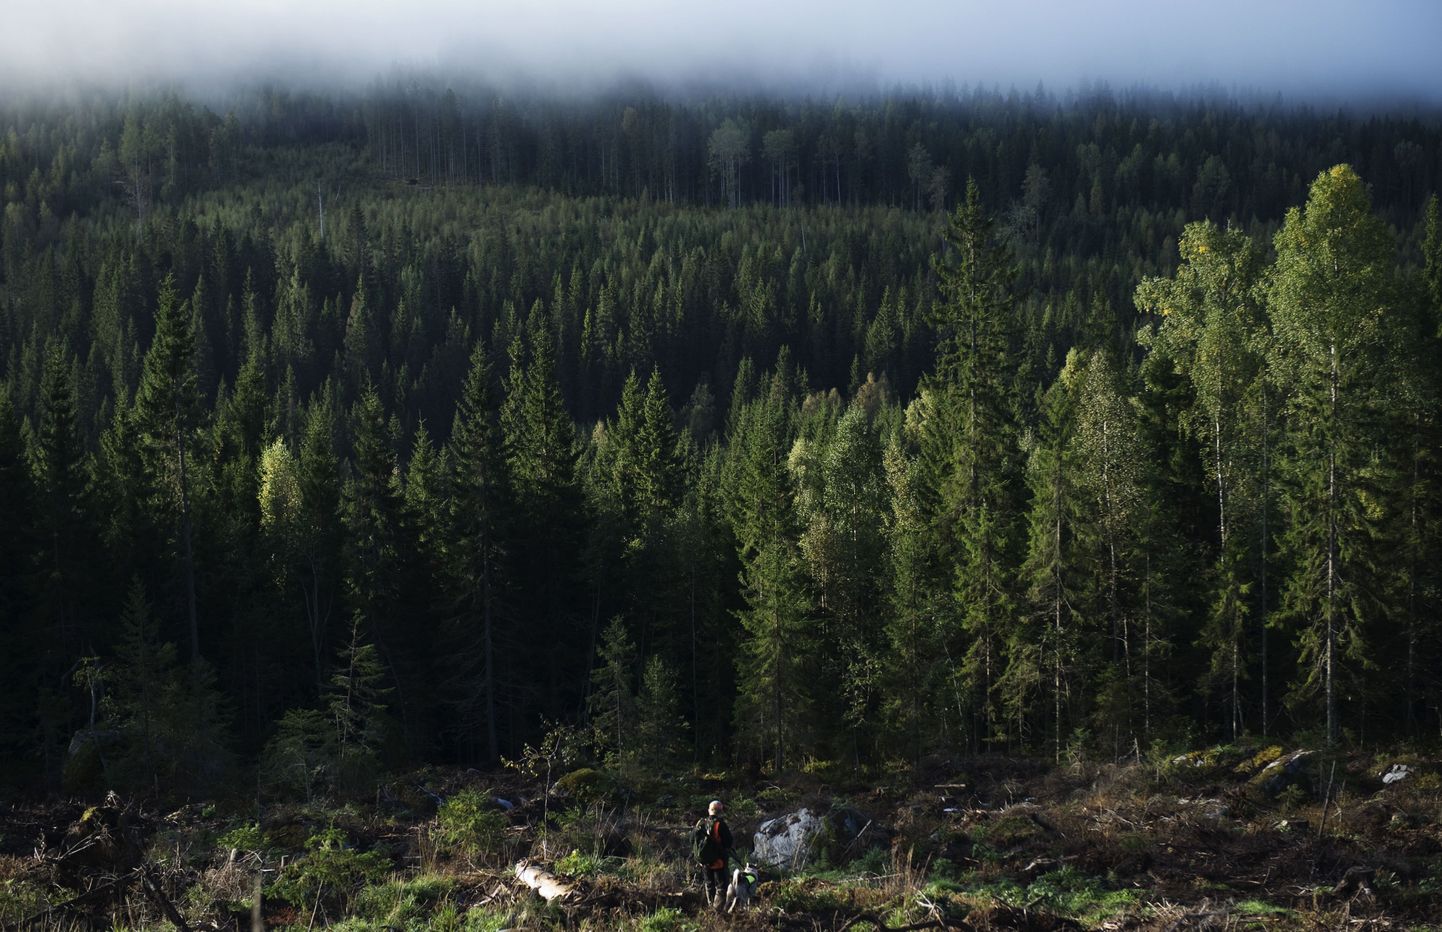 Rootsi mees eksles 12 päeva metsas